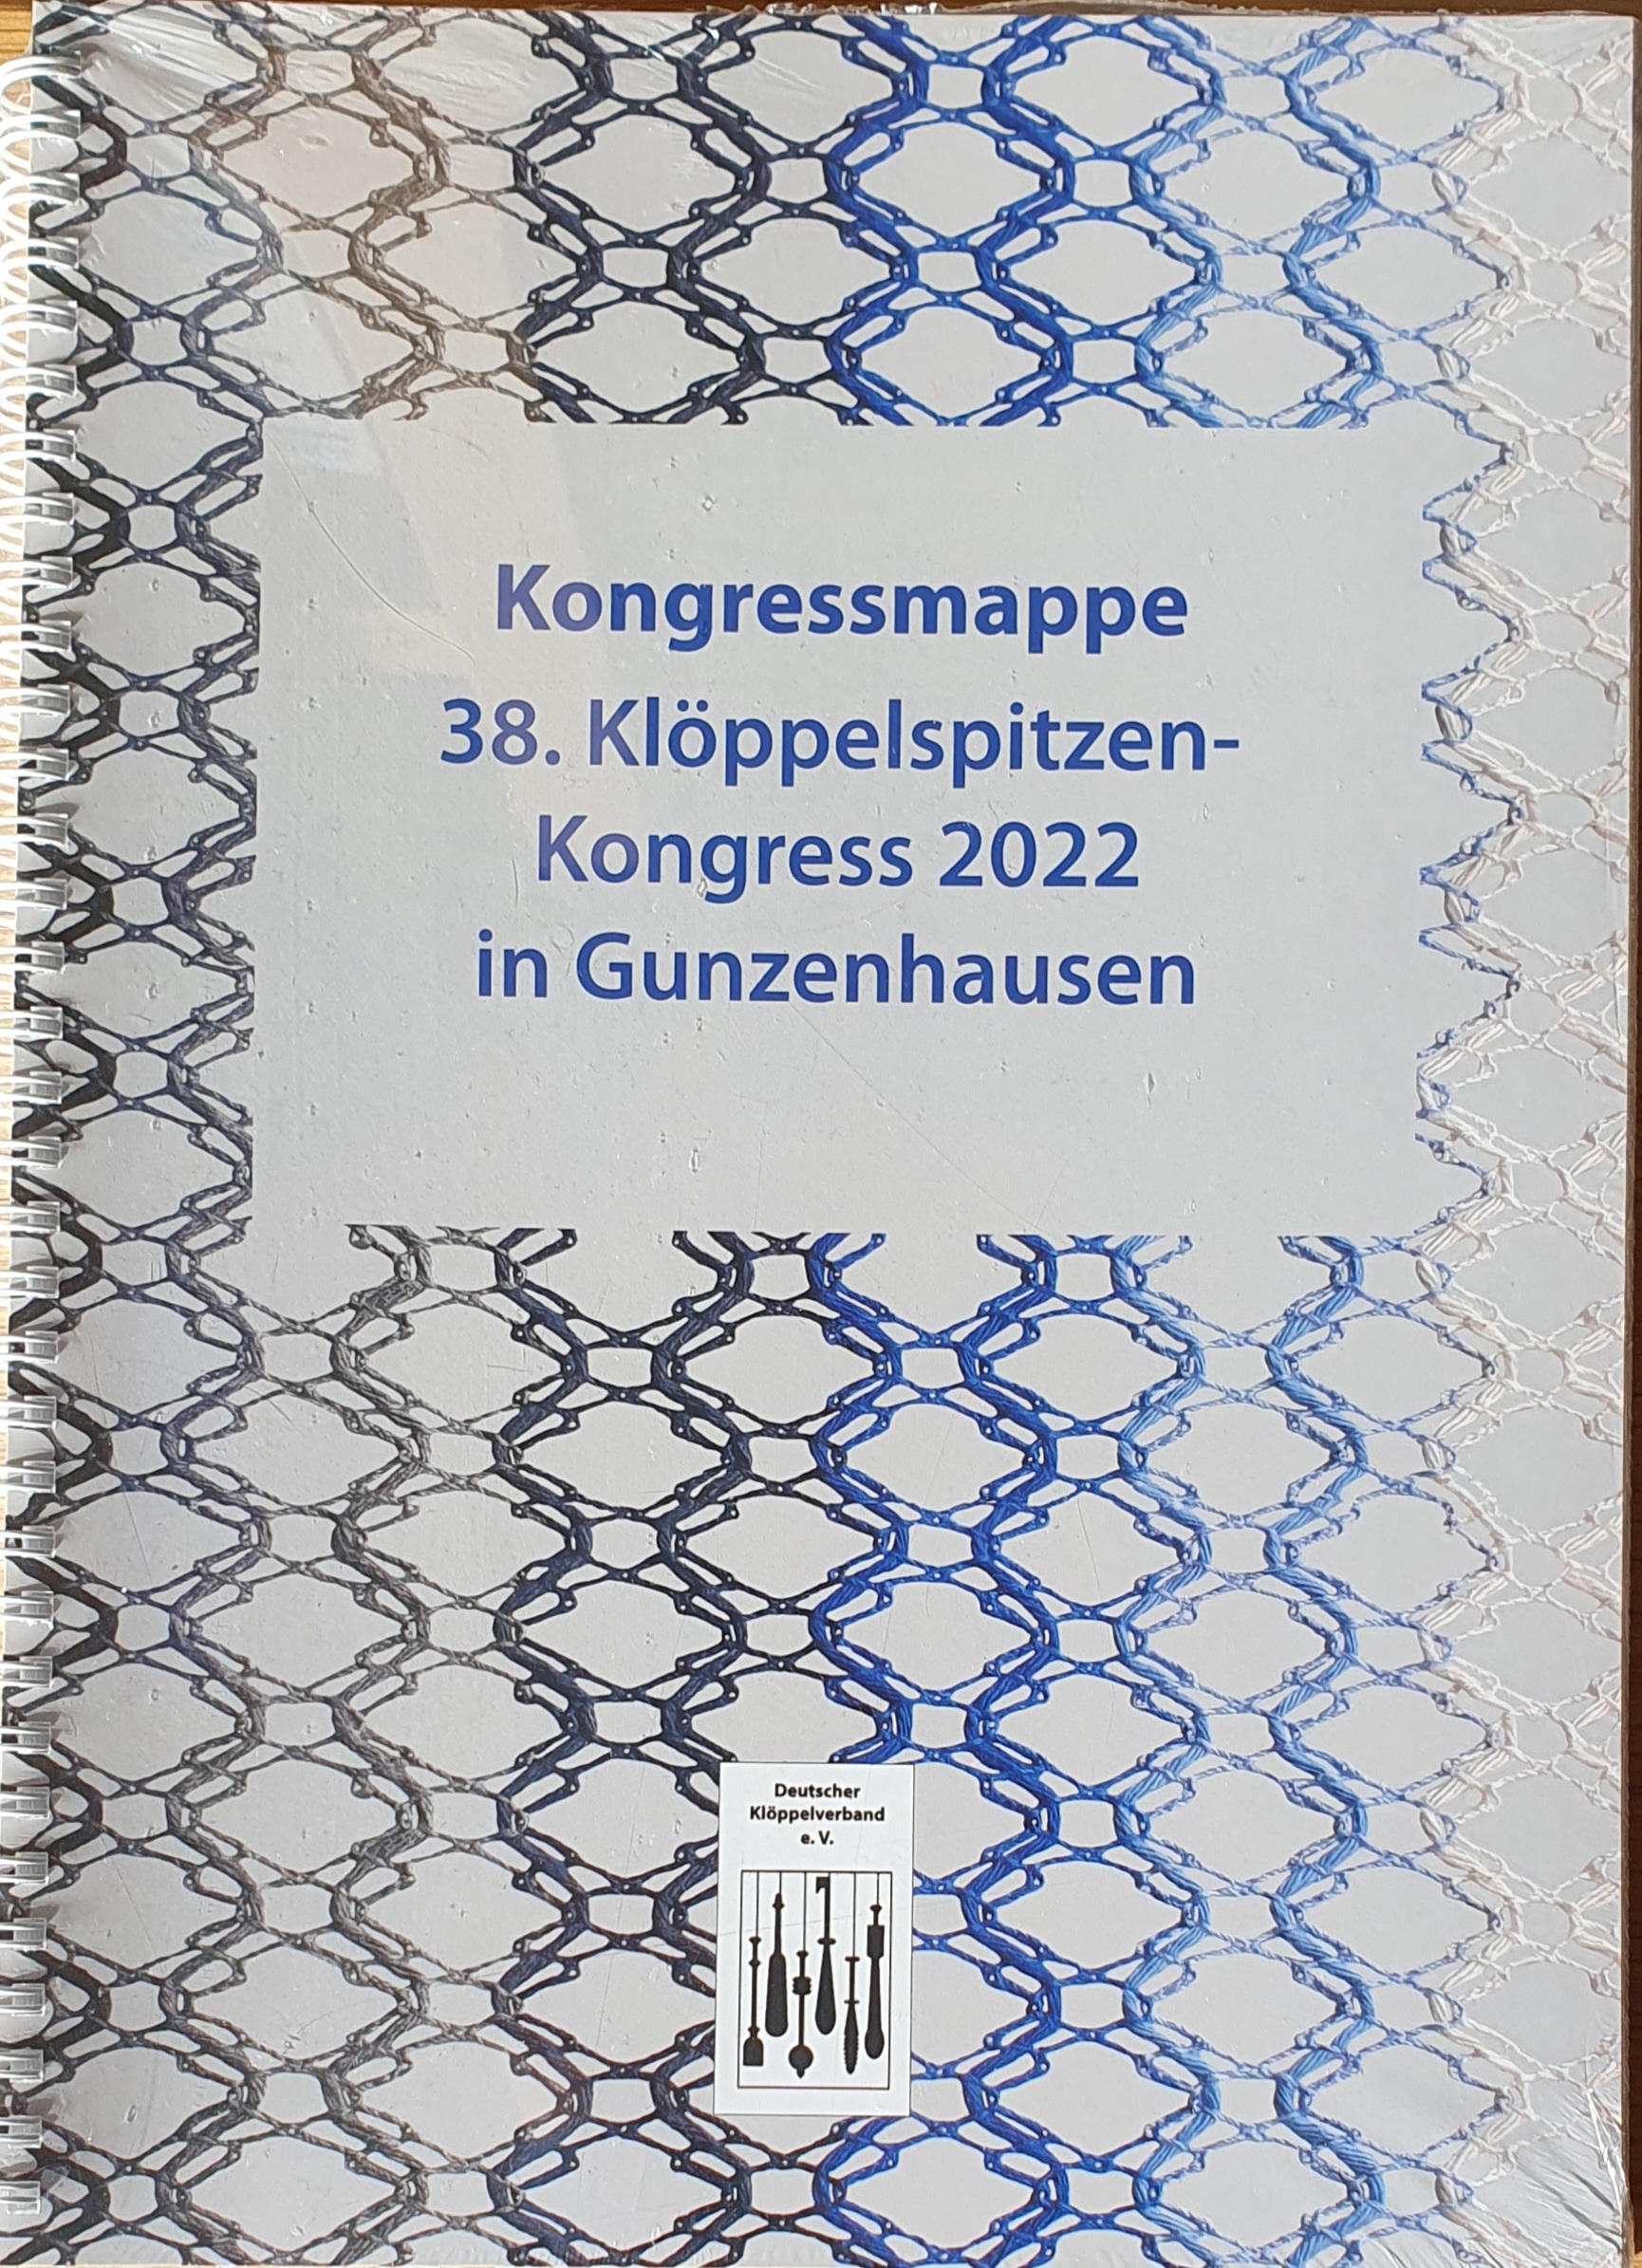 2022 Kongressmappe Gunzenhausen